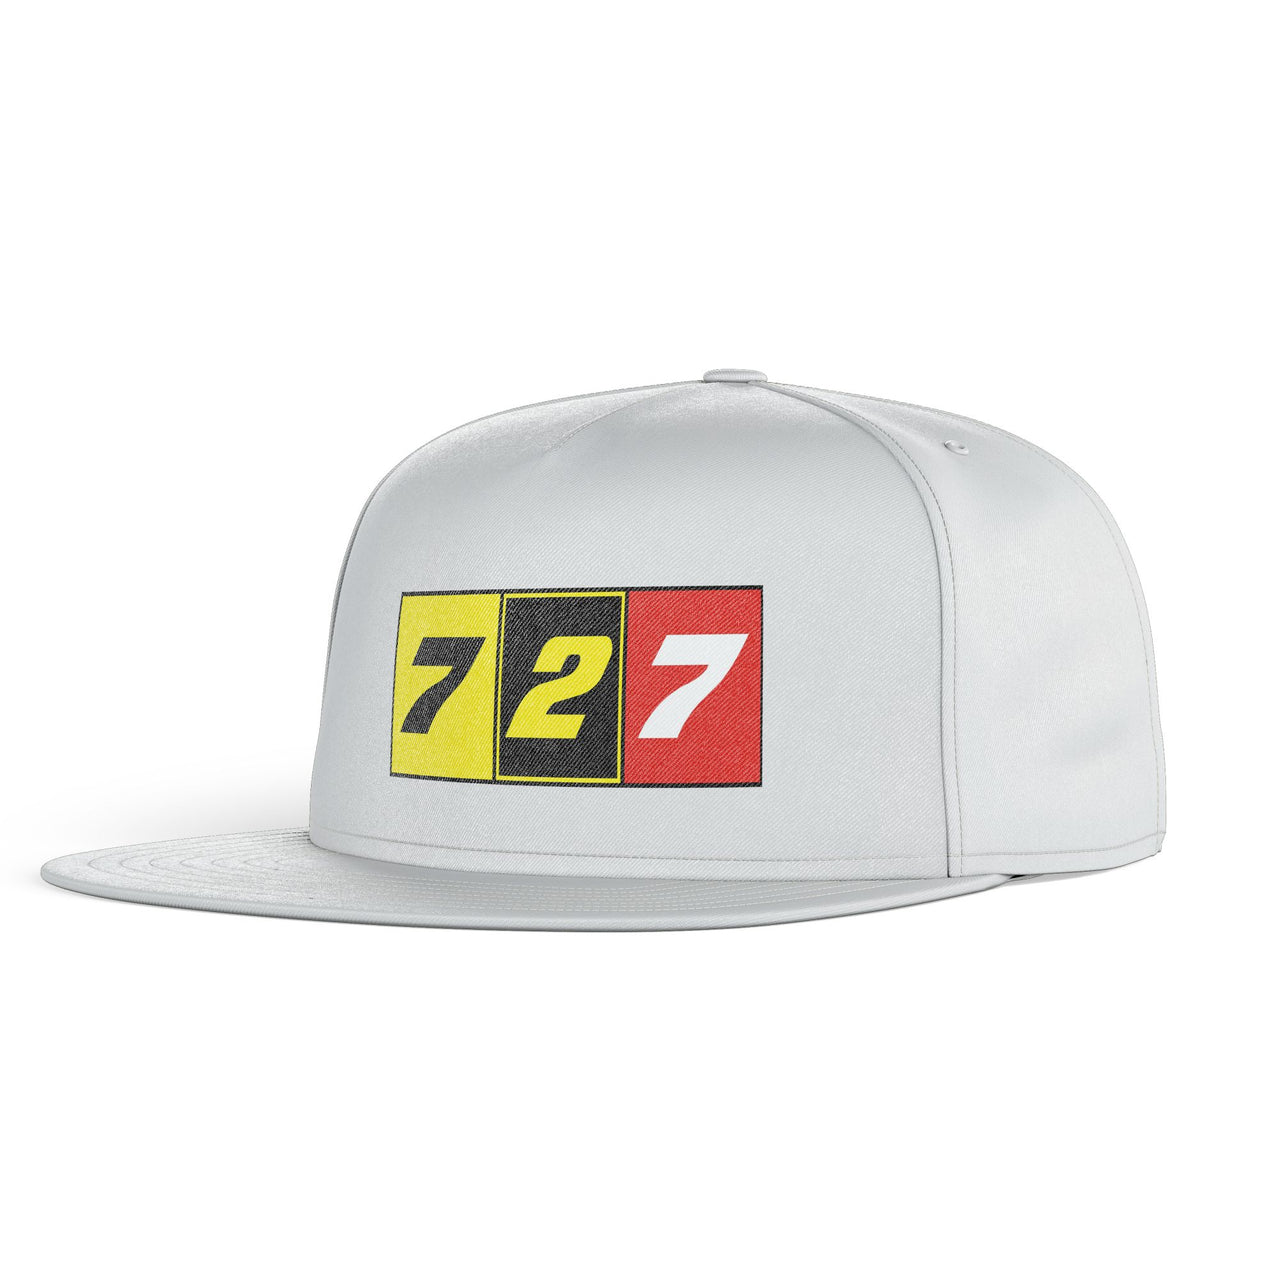 Flat Colourful 727 Designed Snapback Caps & Hats